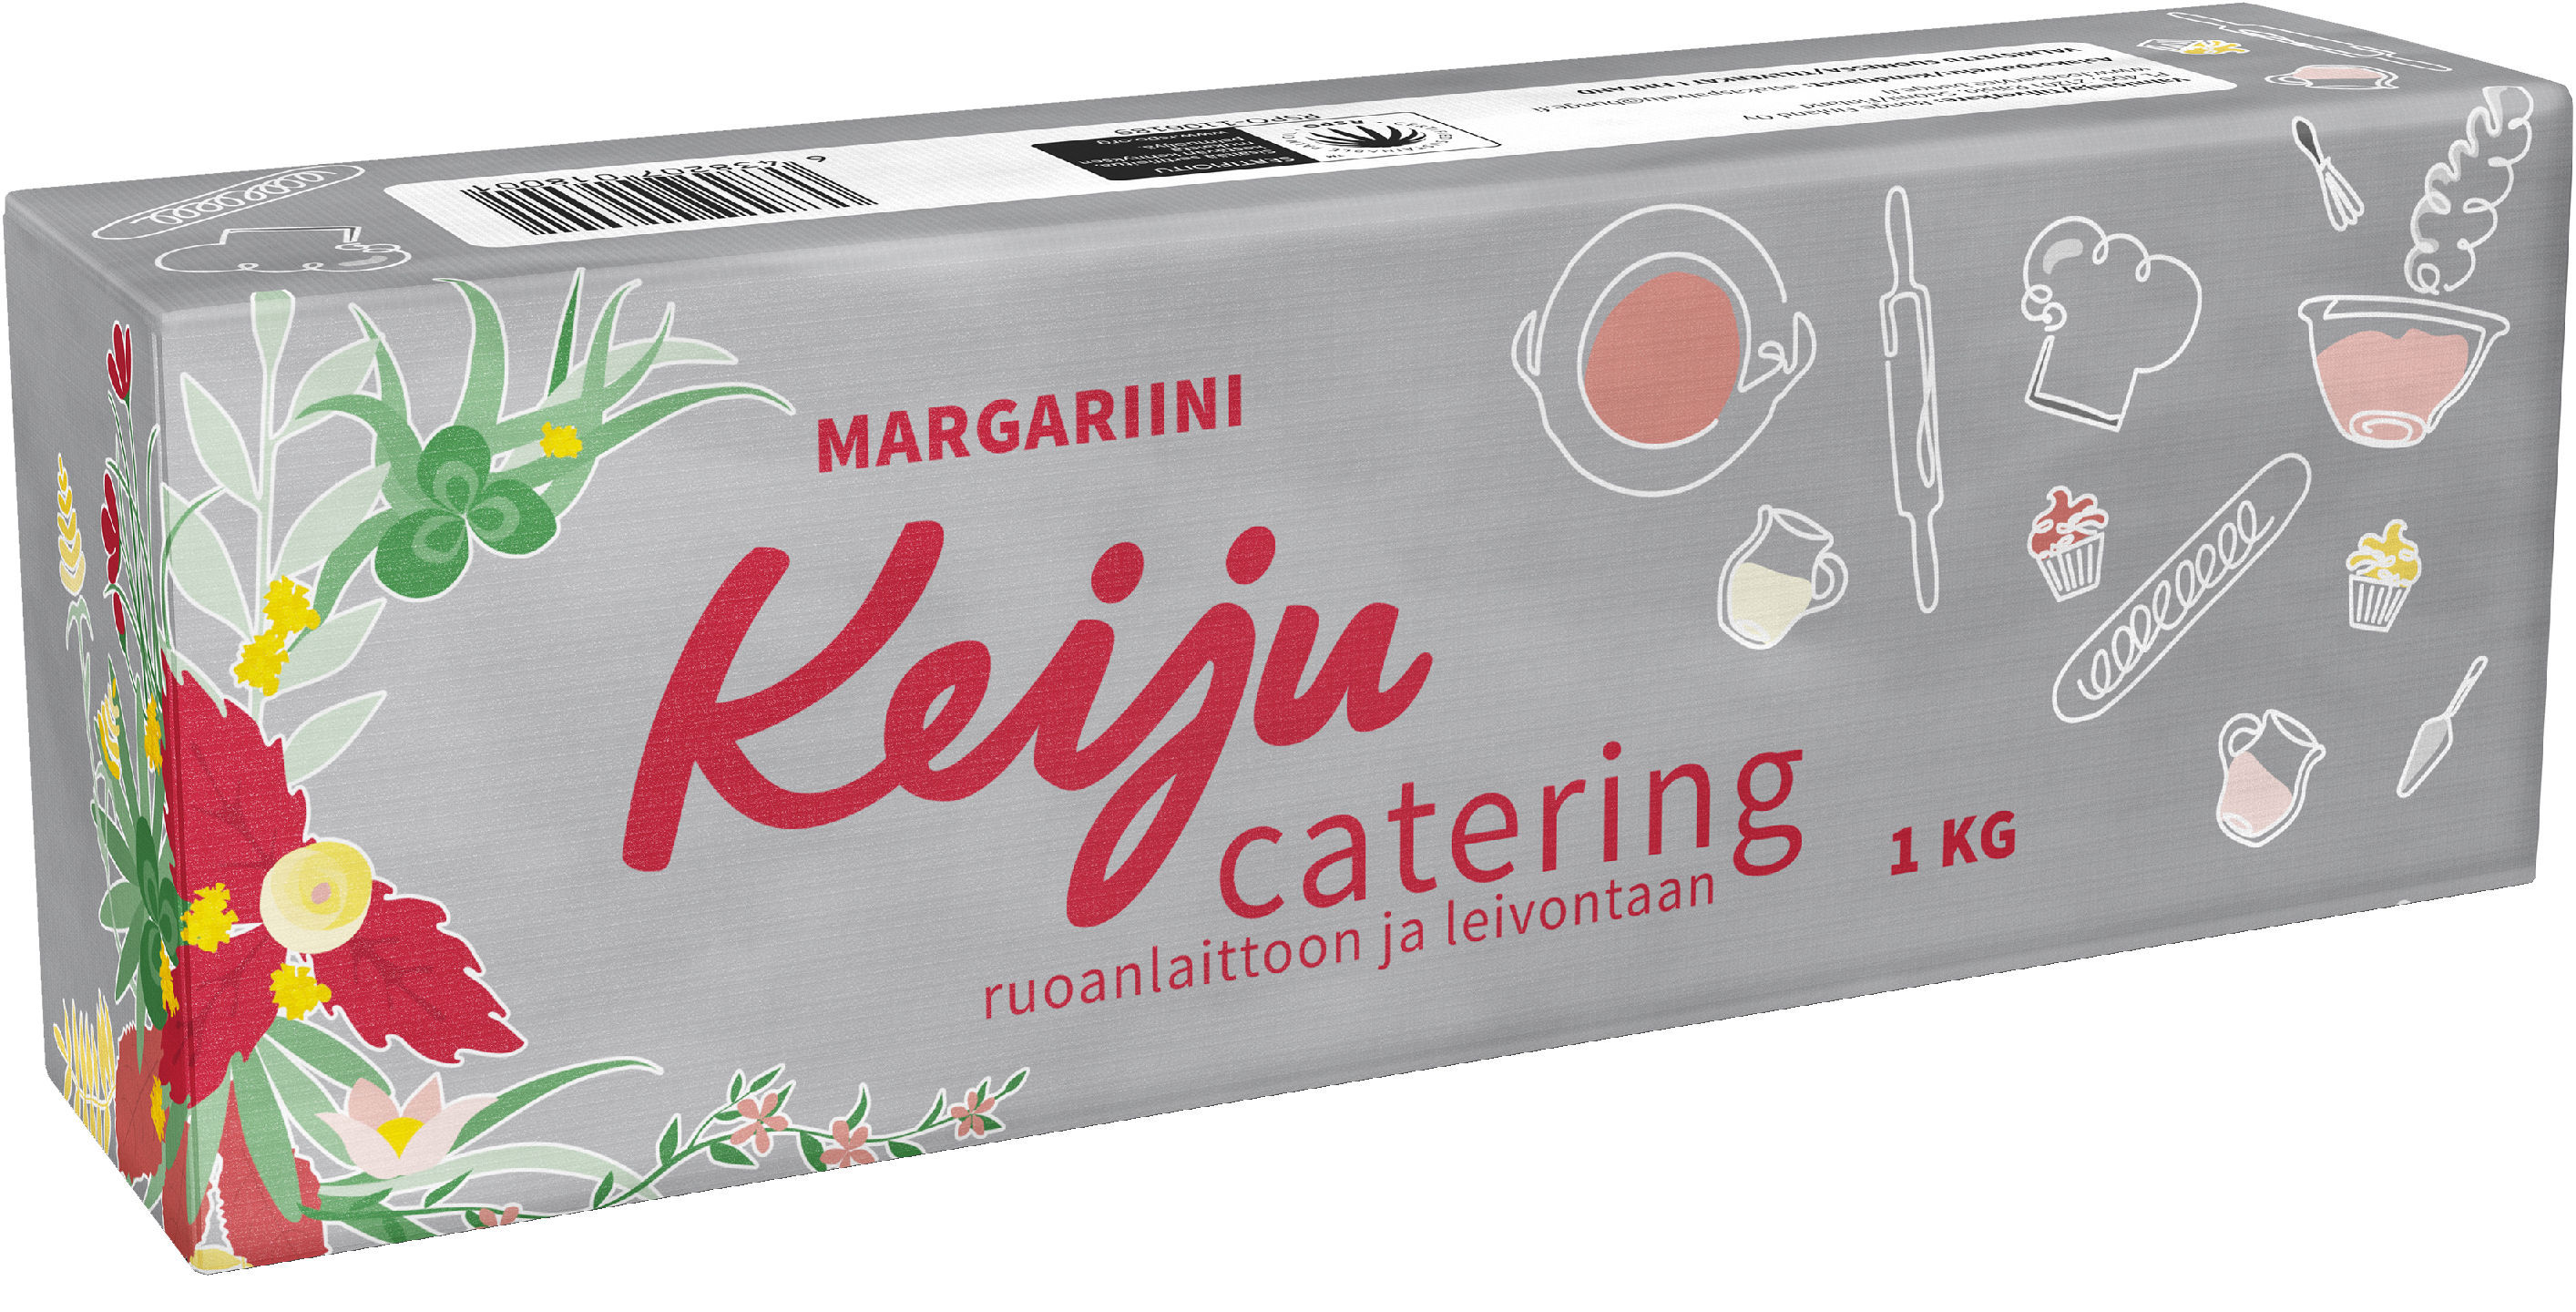 Keiju Catering margariini 1kg laktoositon